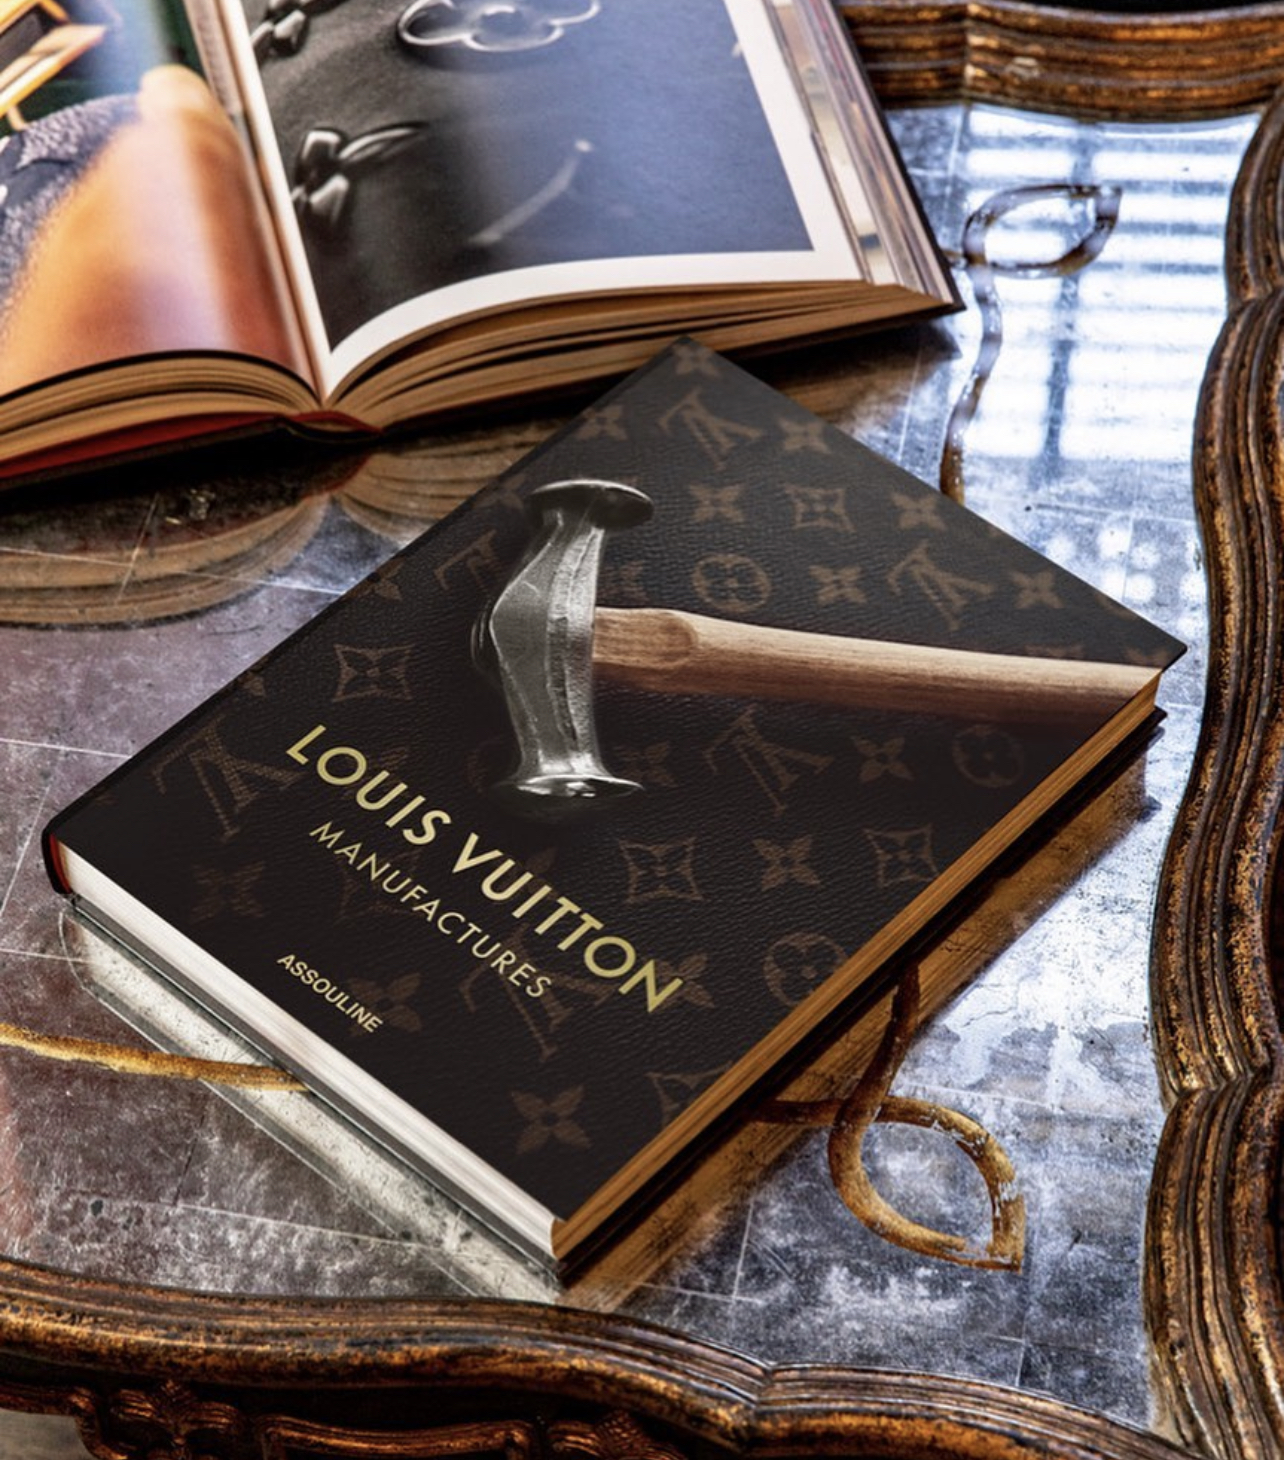 Libro Louis Vuitton Manufactures, versión inglesa - Libros y papelería  R08873